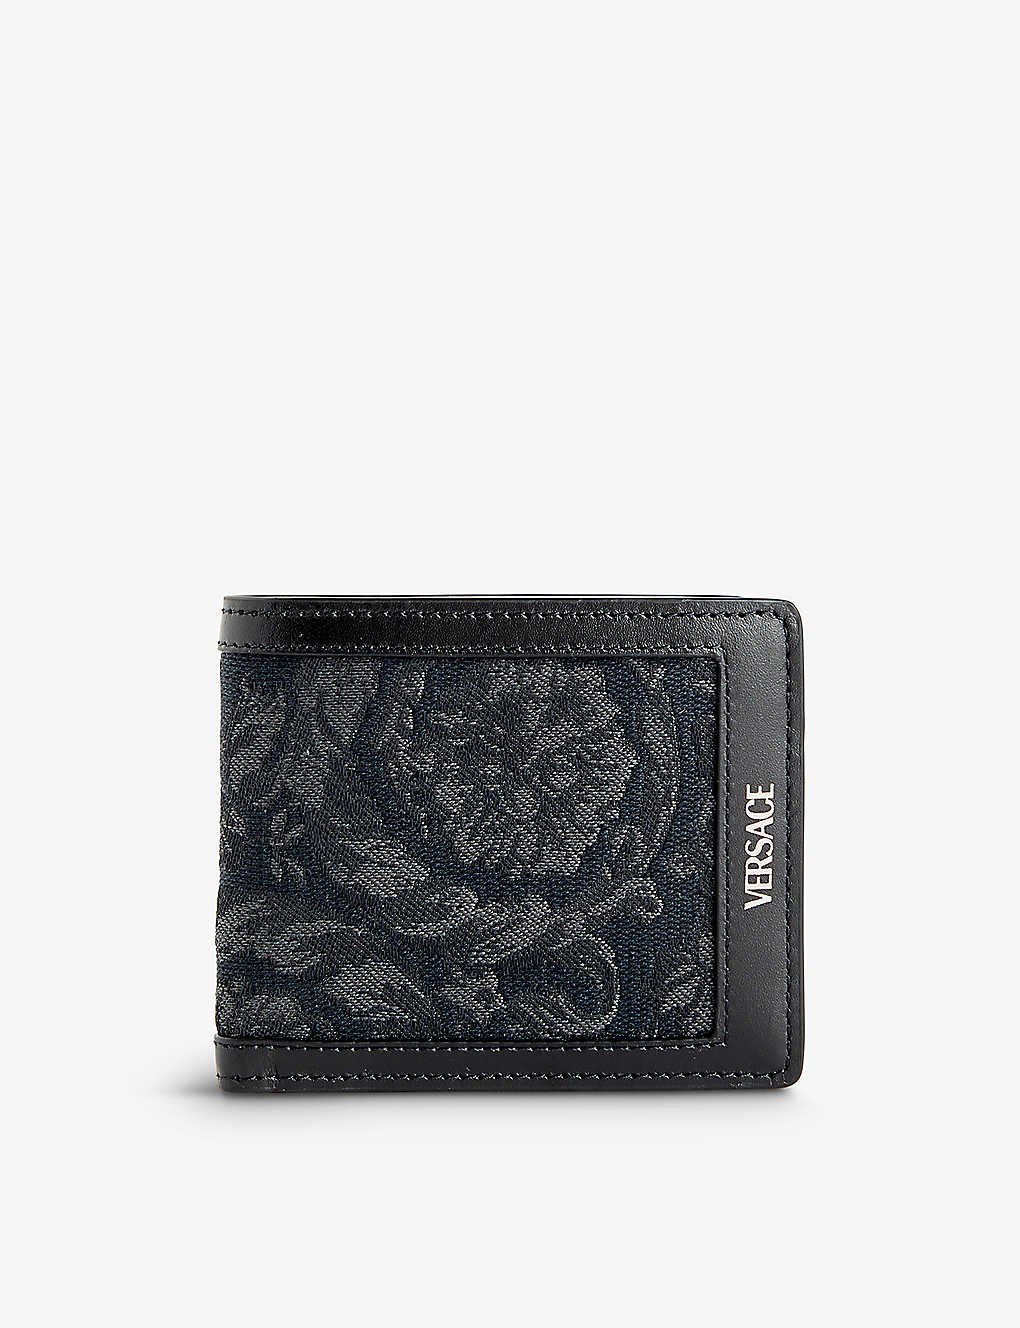 Versace Black Ruthenium Baroque Leather Wallet